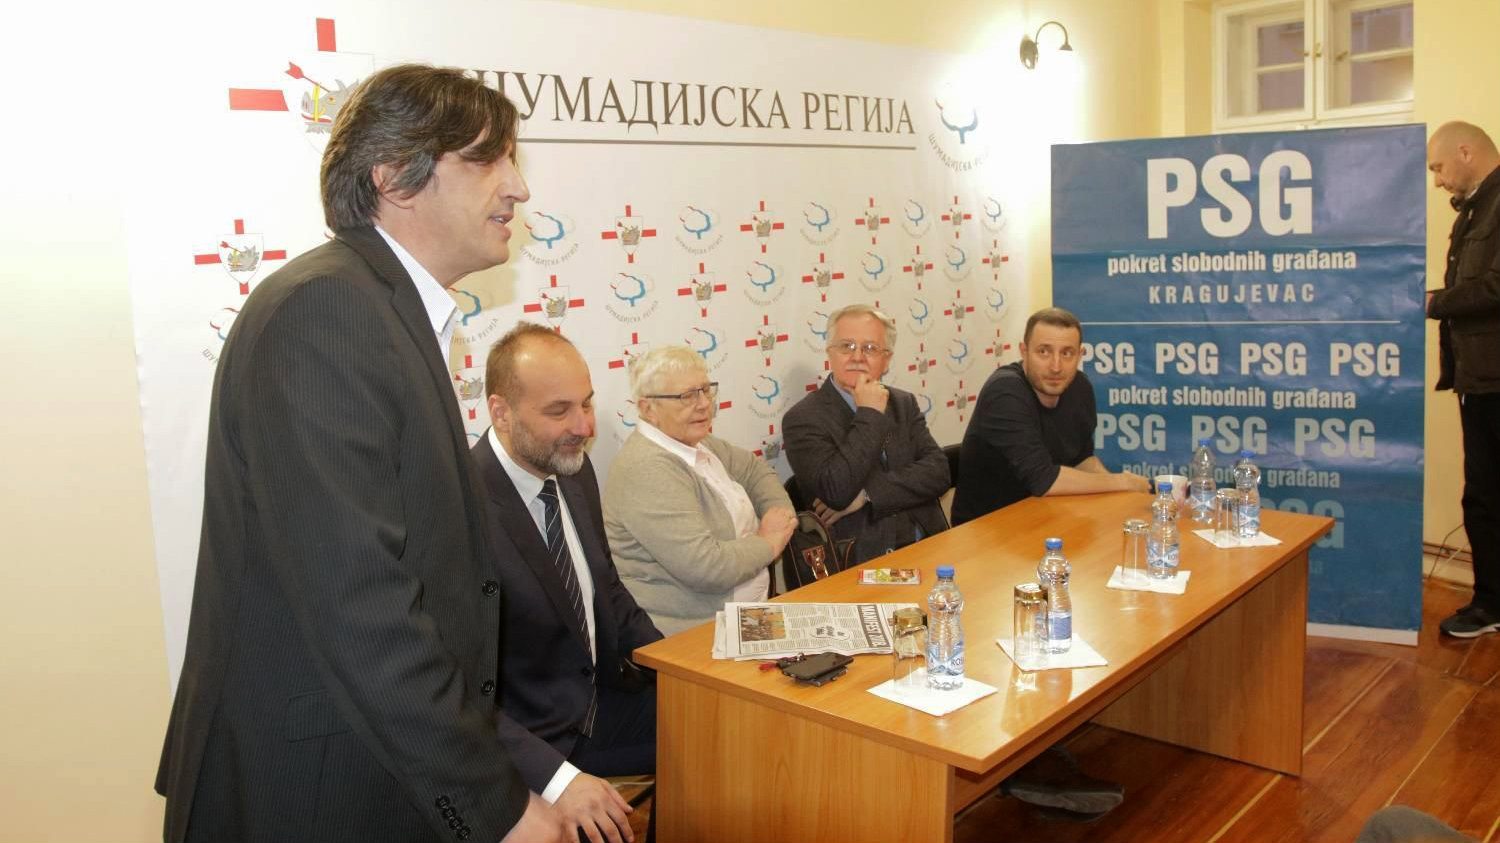 Janković: Demokratska, a ne autokratska Srbija 1